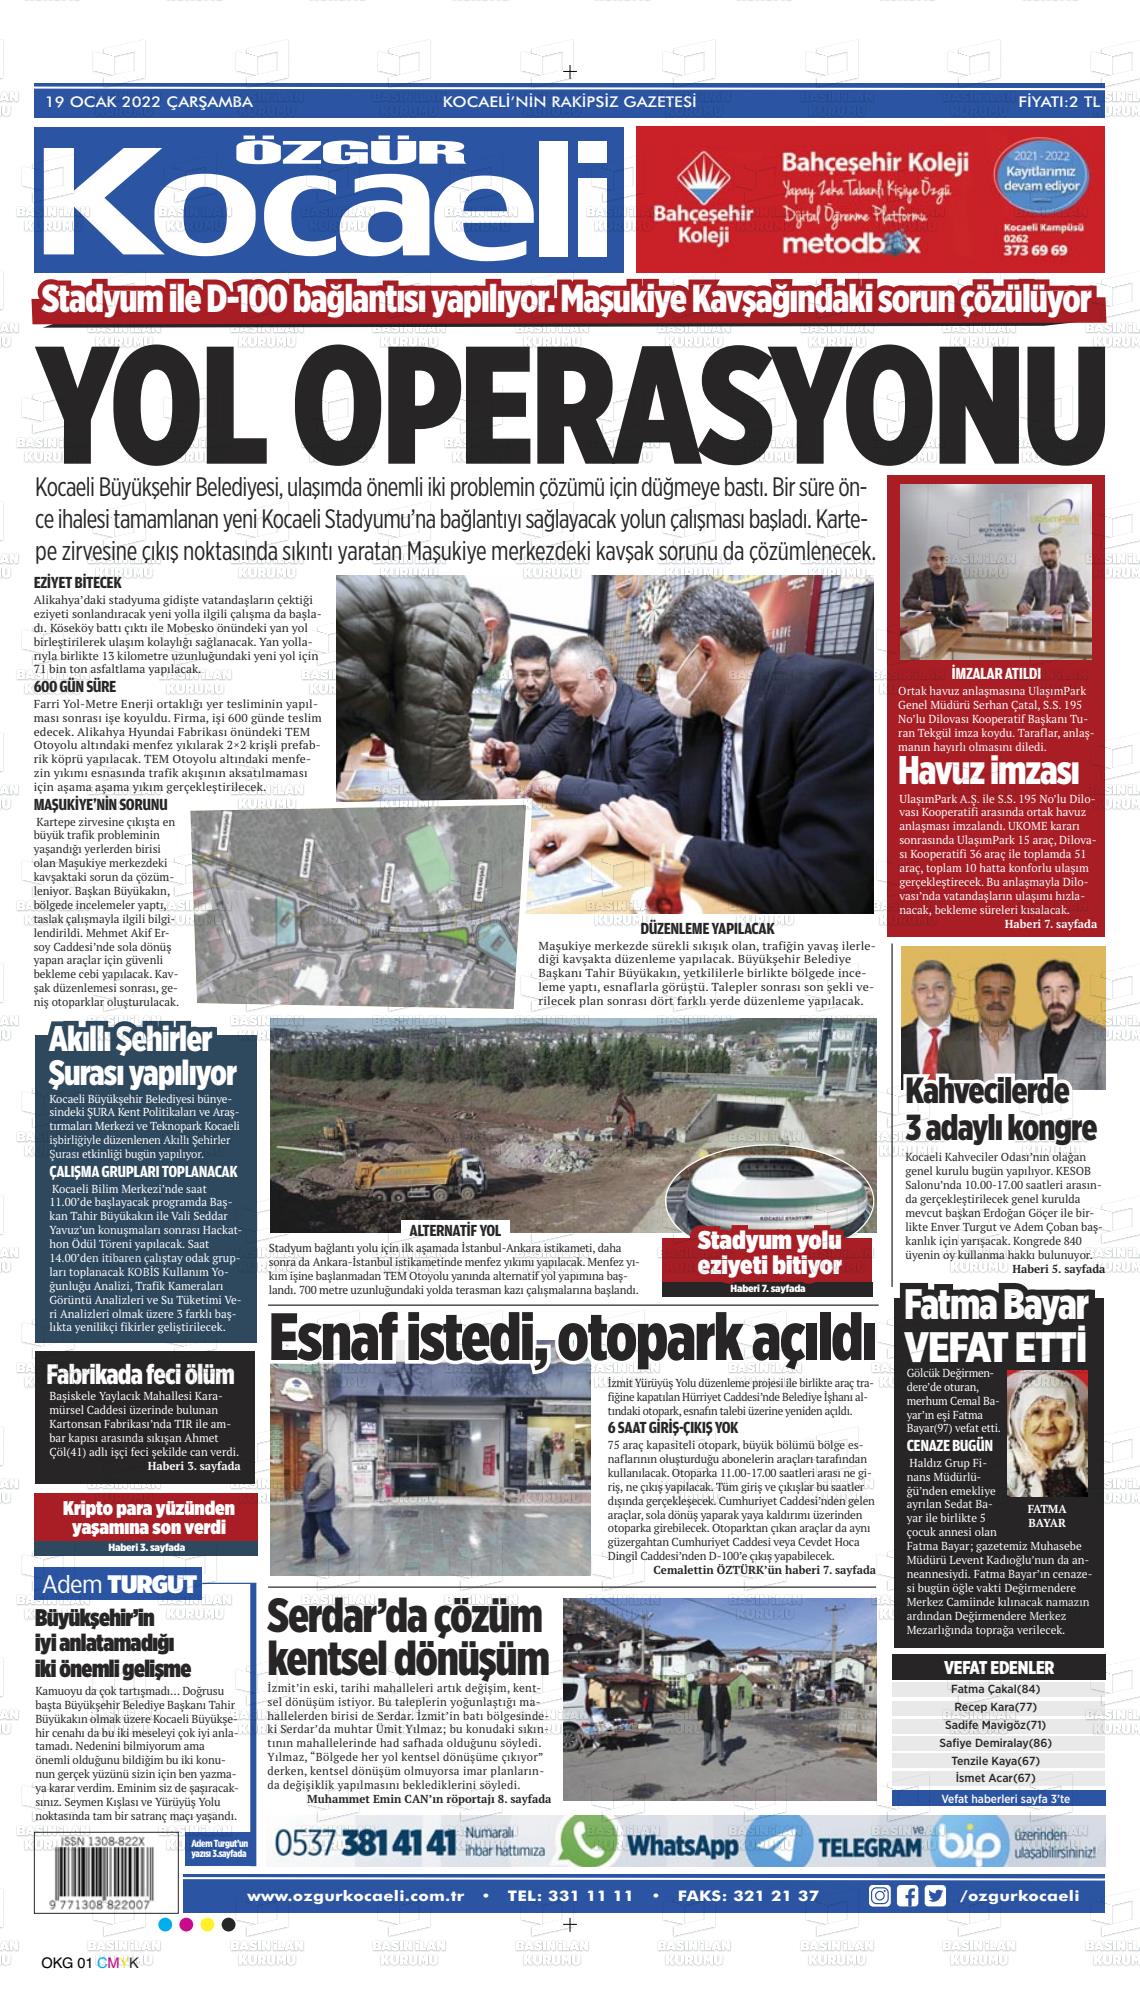 19 Ocak 2022 Özgür Kocaeli Gazete Manşeti